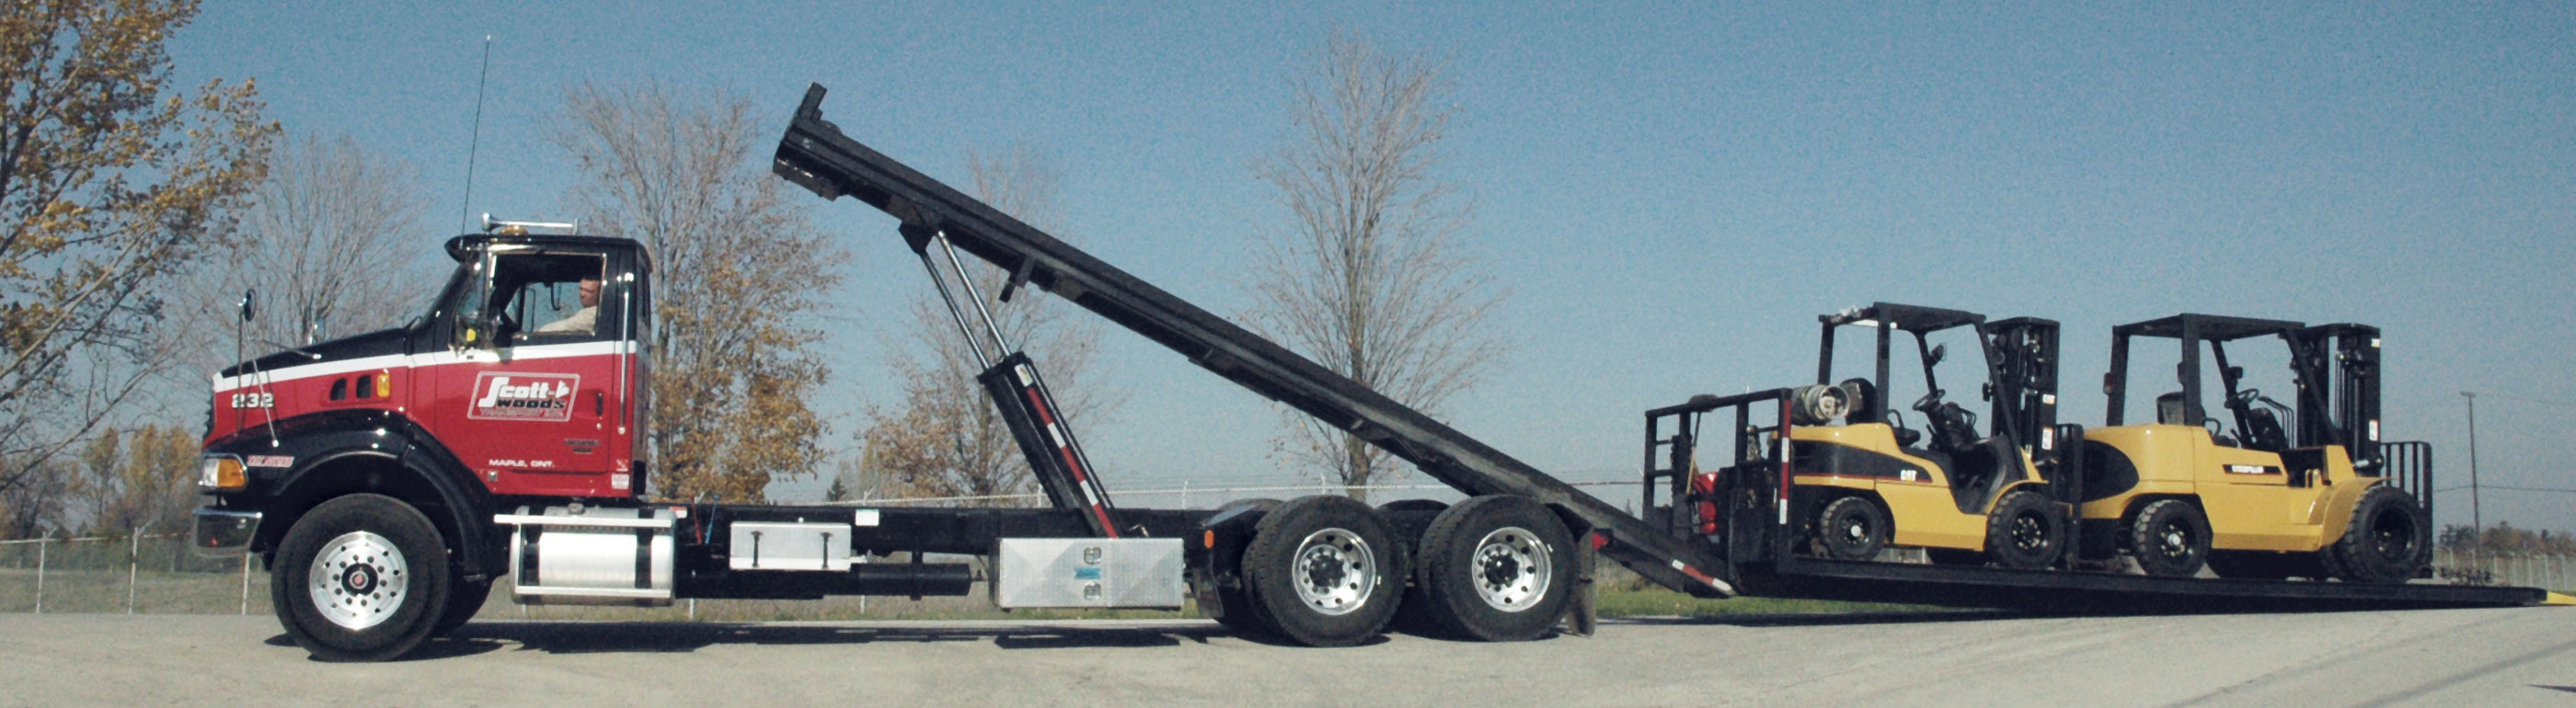 Heavy haul truck transporting oversized equipment